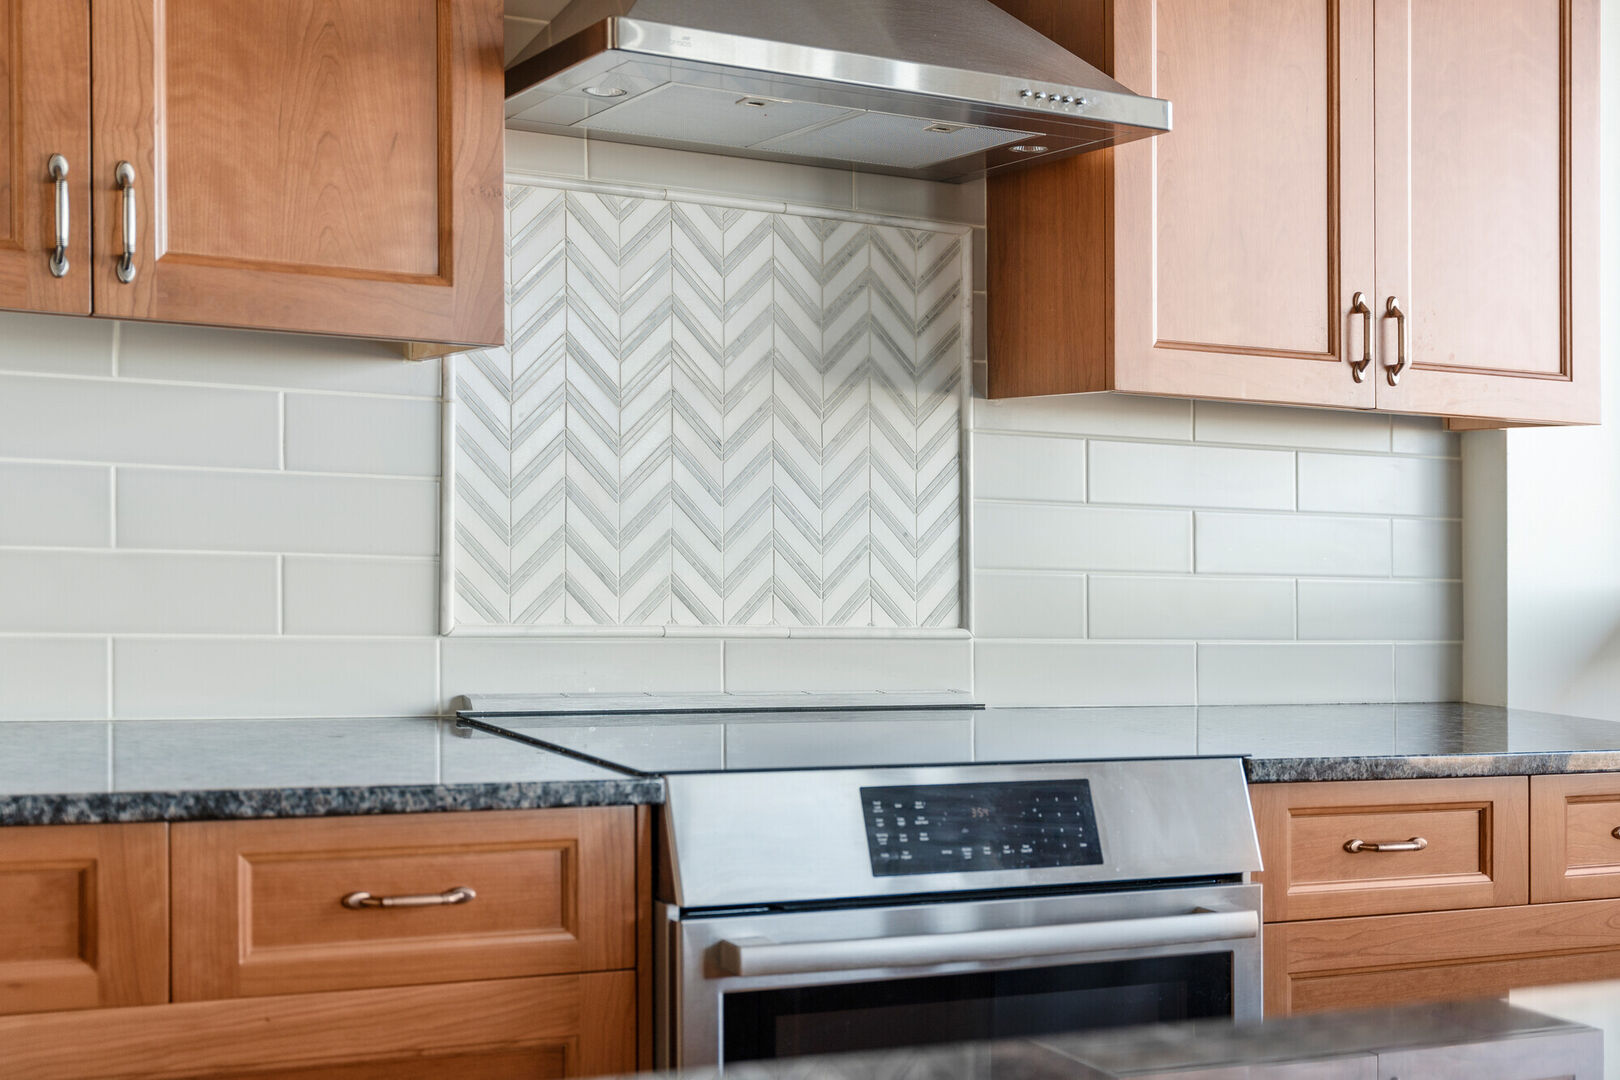 Kitchen backsplash accent tile above stove, white and grey marble chevron tile